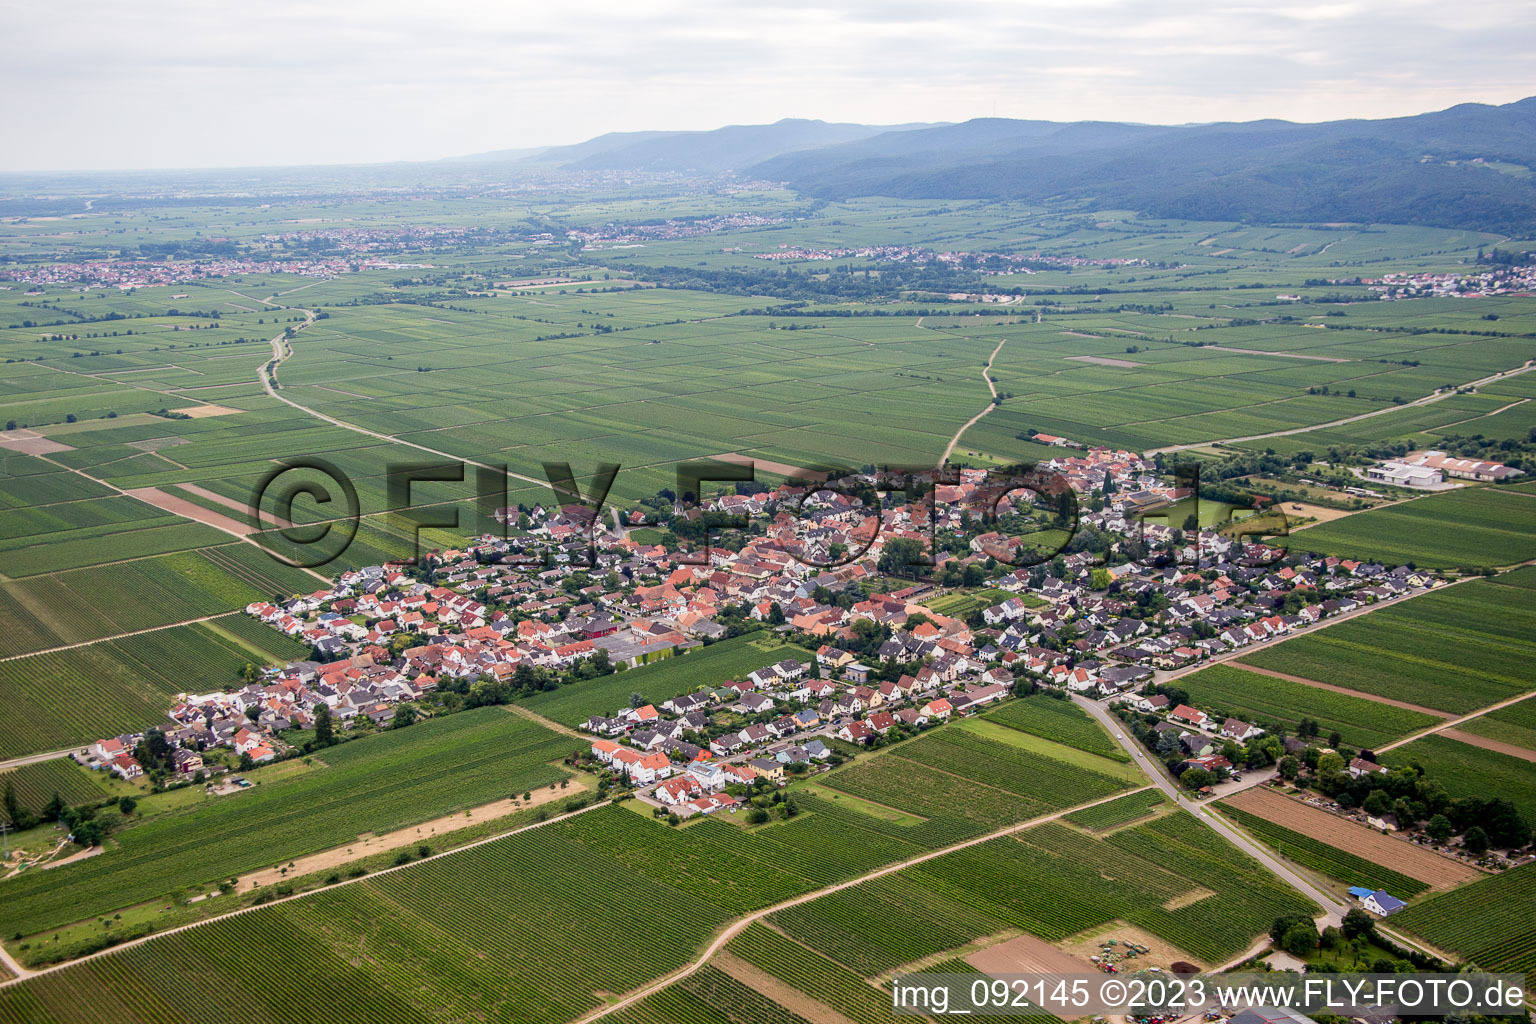 Aerial view of Gönnheim in the state Rhineland-Palatinate, Germany